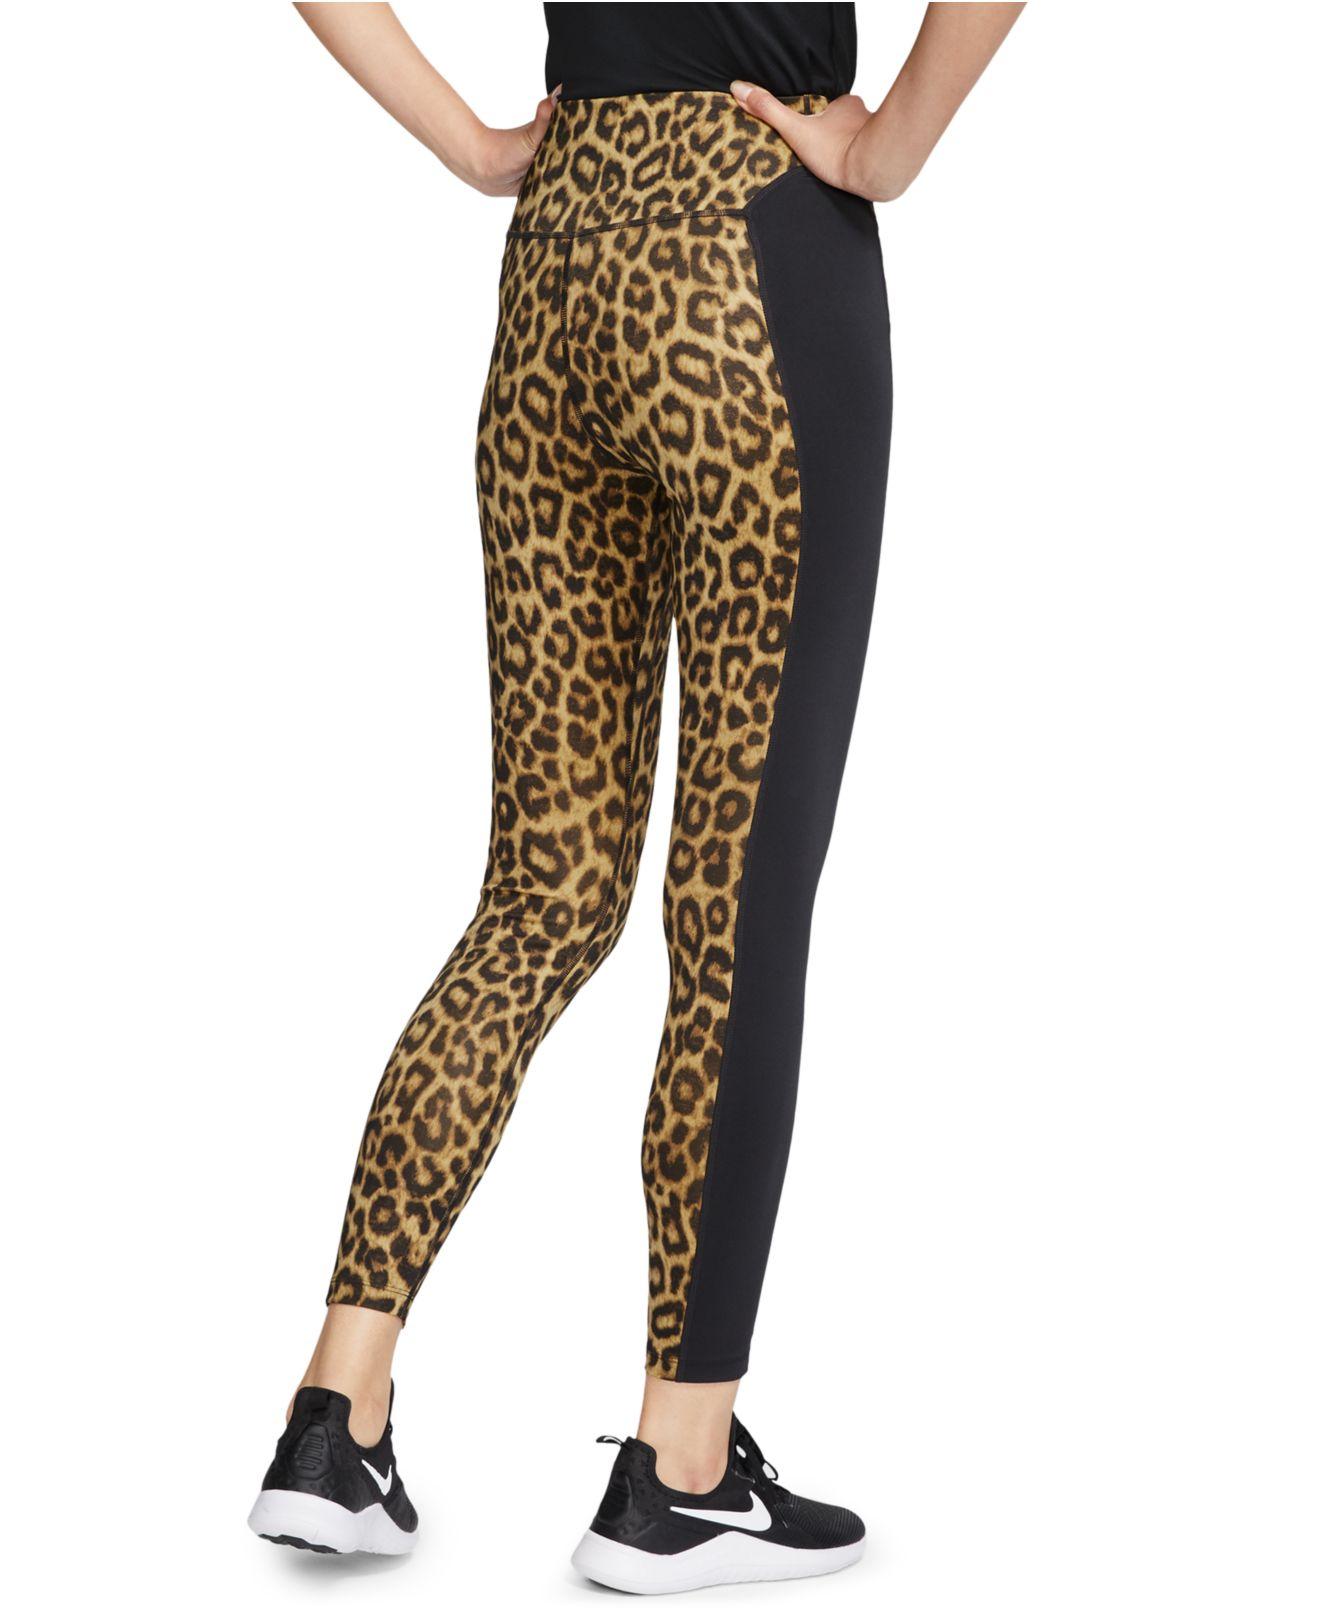 nike leopard print leggings uk